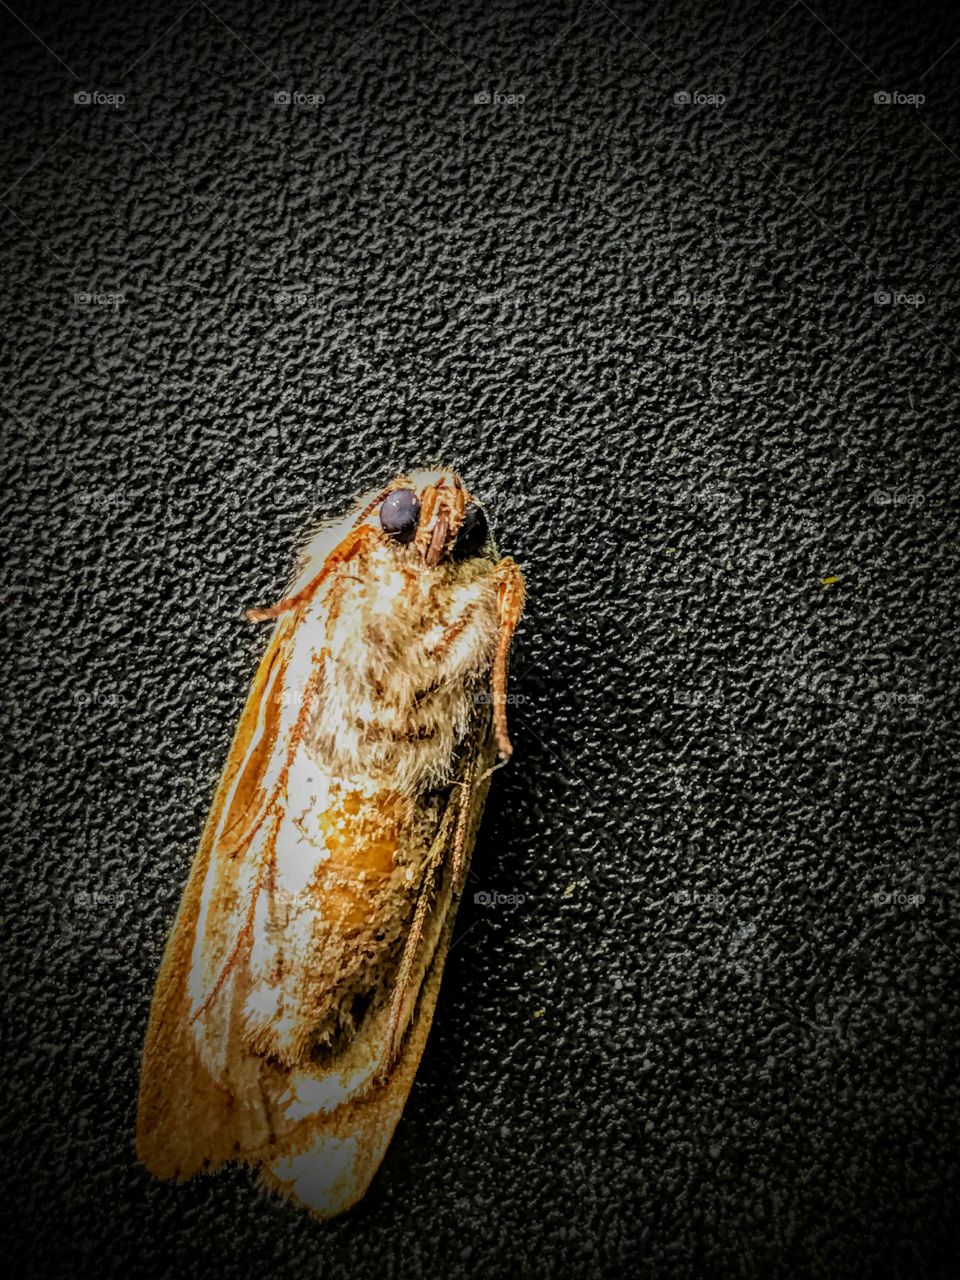 Controlling a moth. Moth meditation